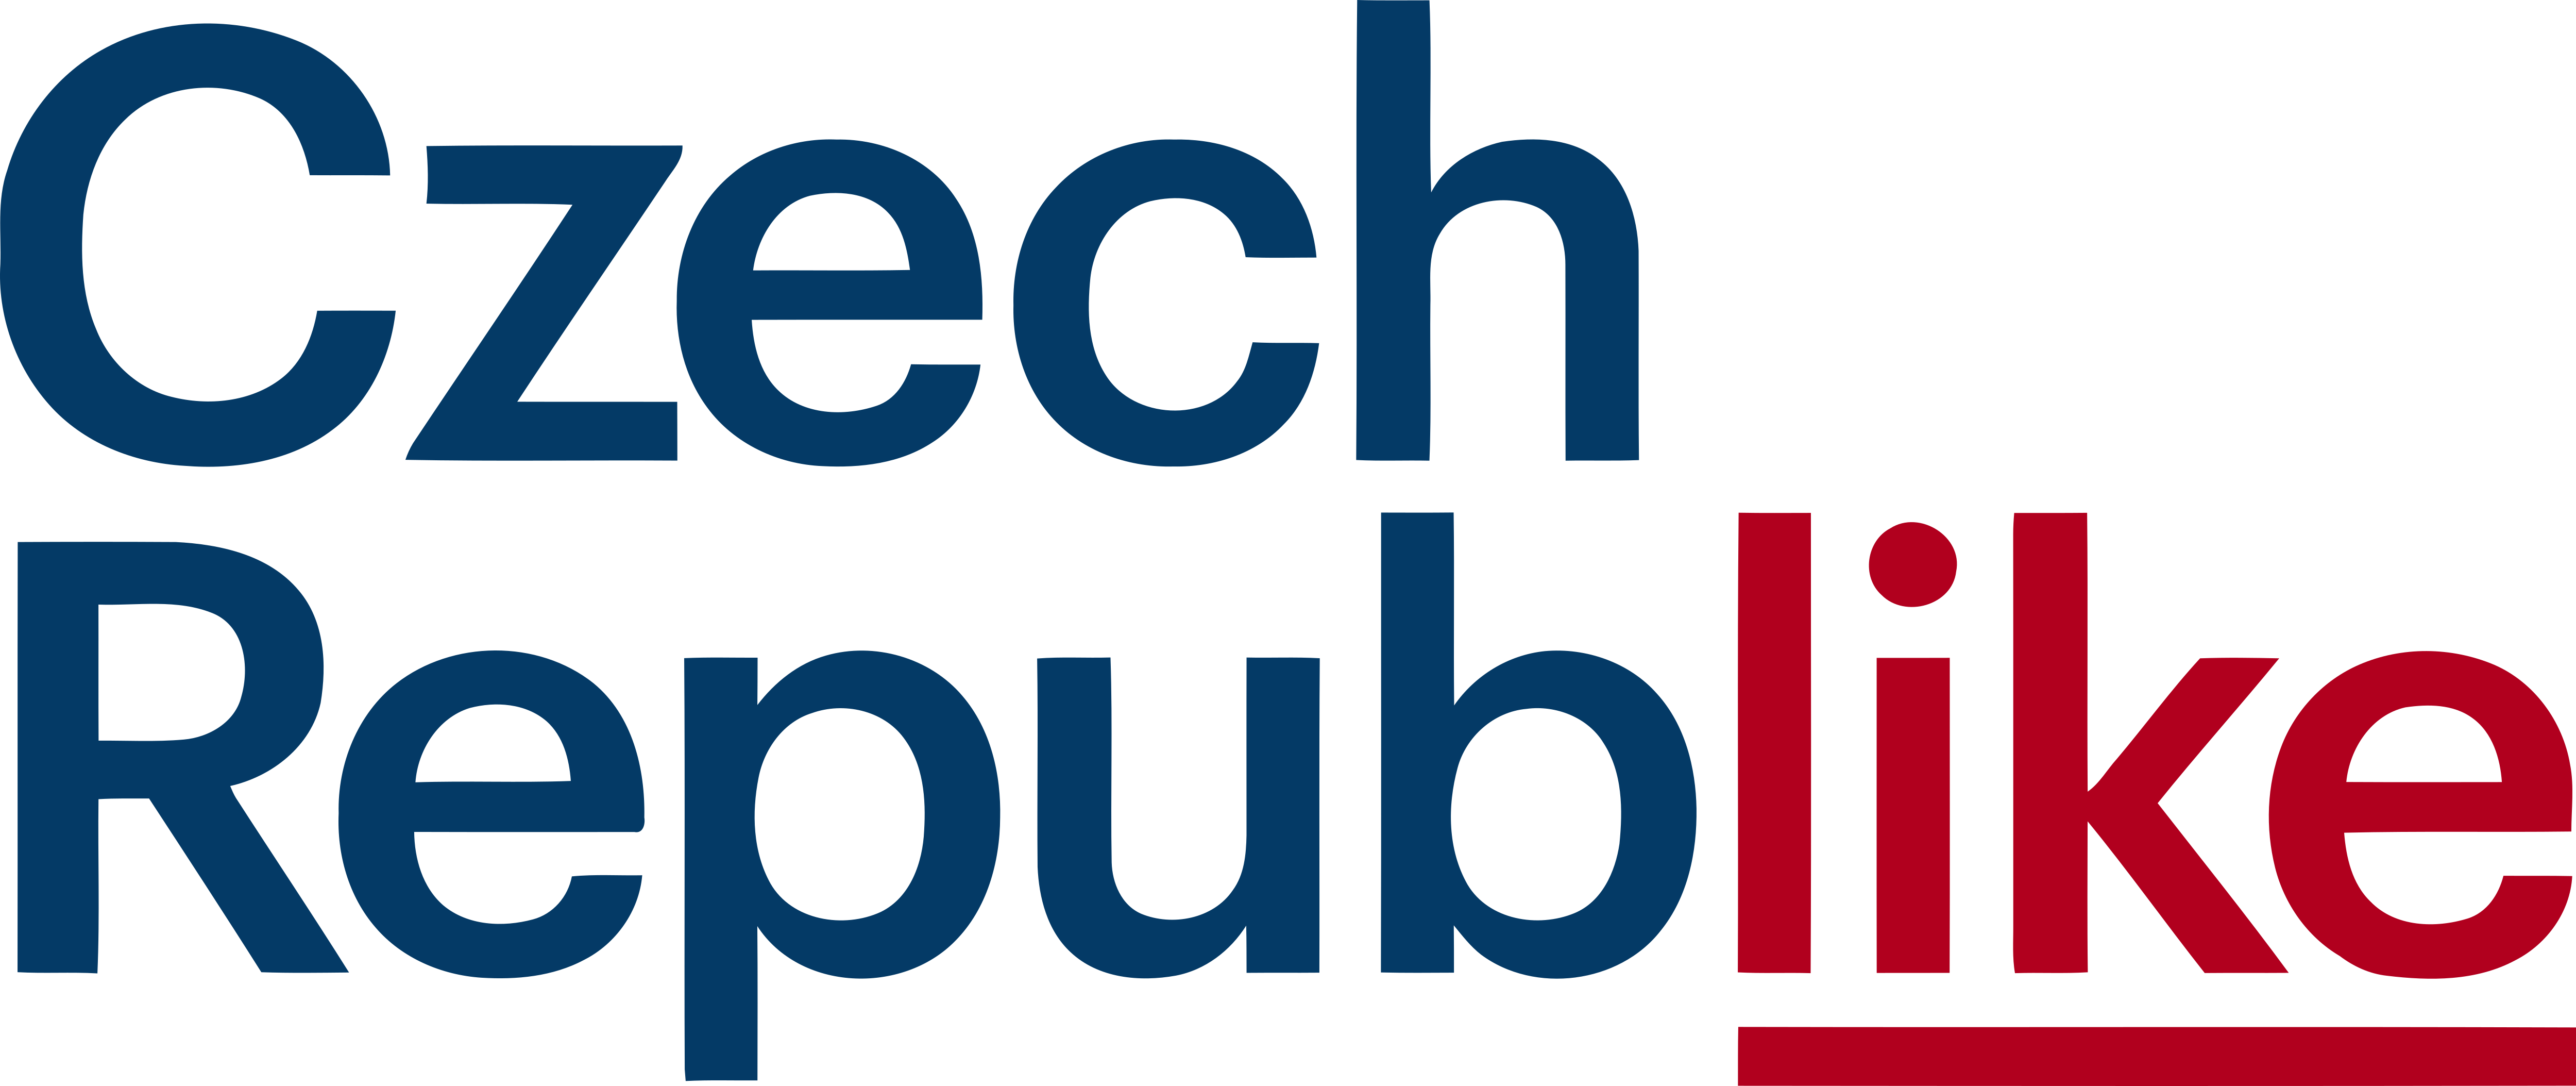 Czech Republic - Logos Download